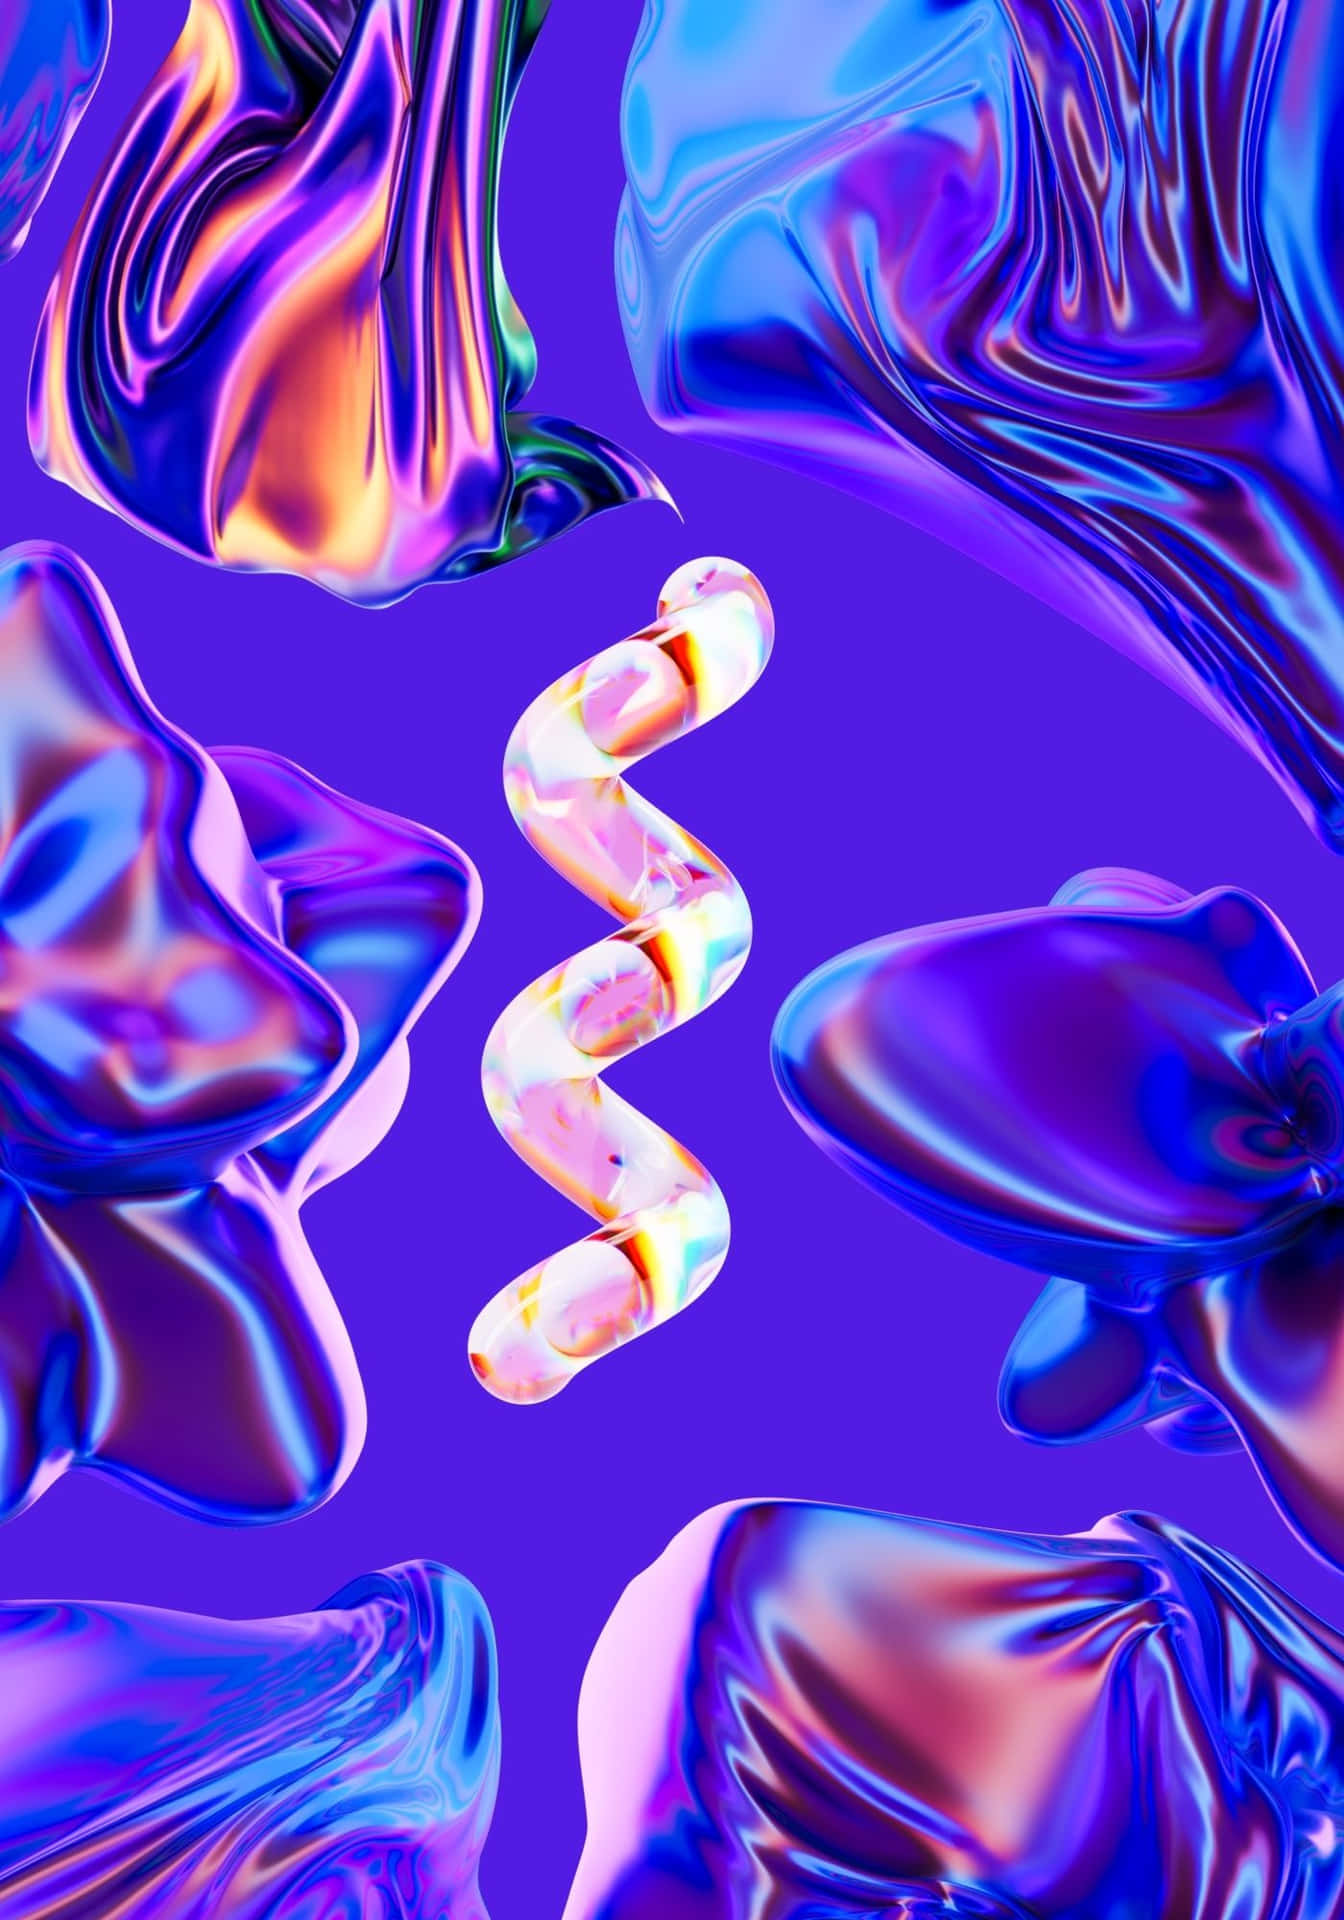 Cool 3D Purple Liquid Background Wallpaper